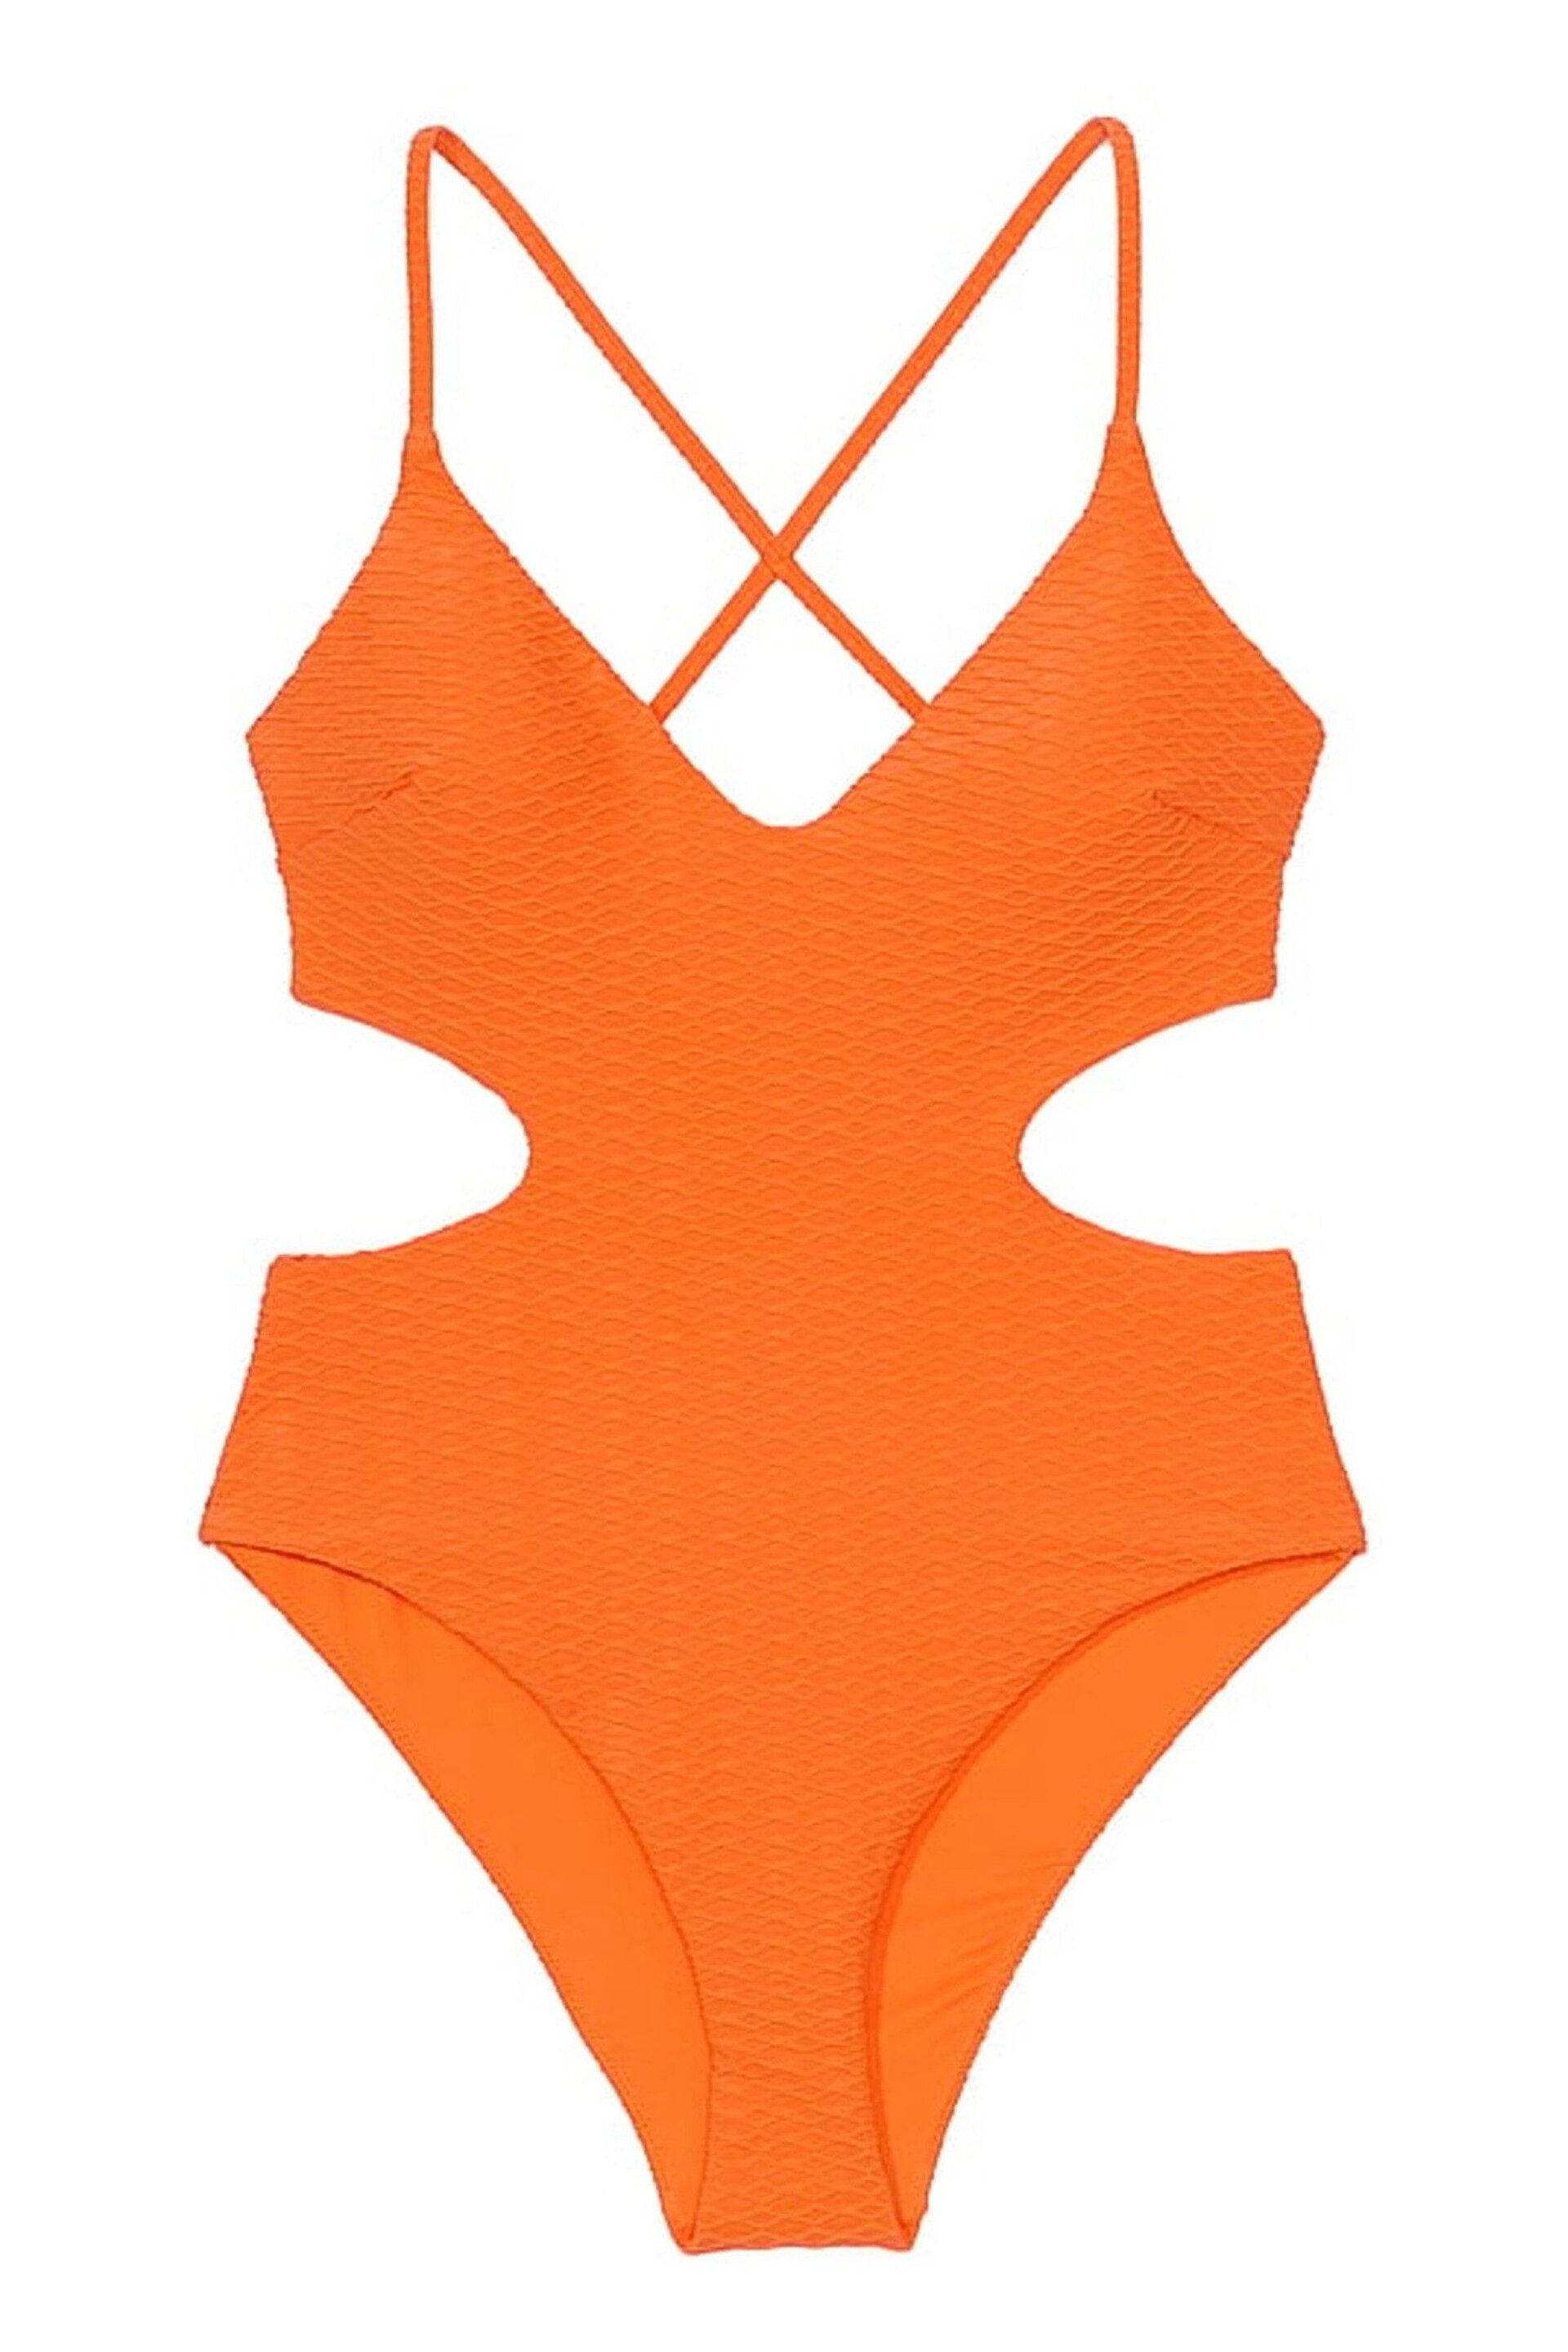 Victoria's Secret Sunset Orange Fishnet Swimsuit - Image 3 of 3